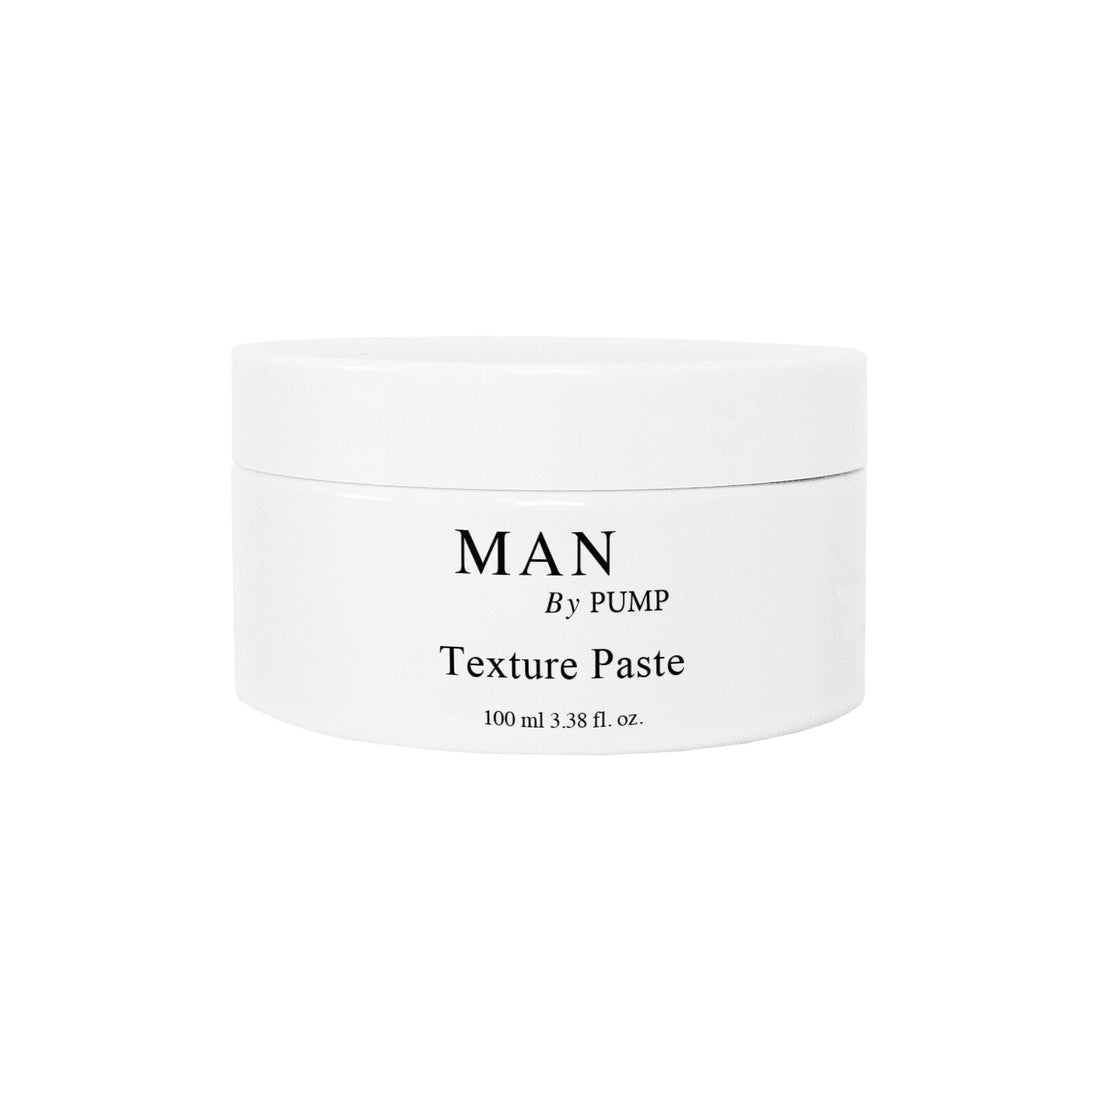 Man by Pump Texture Paste - Pump Haircare